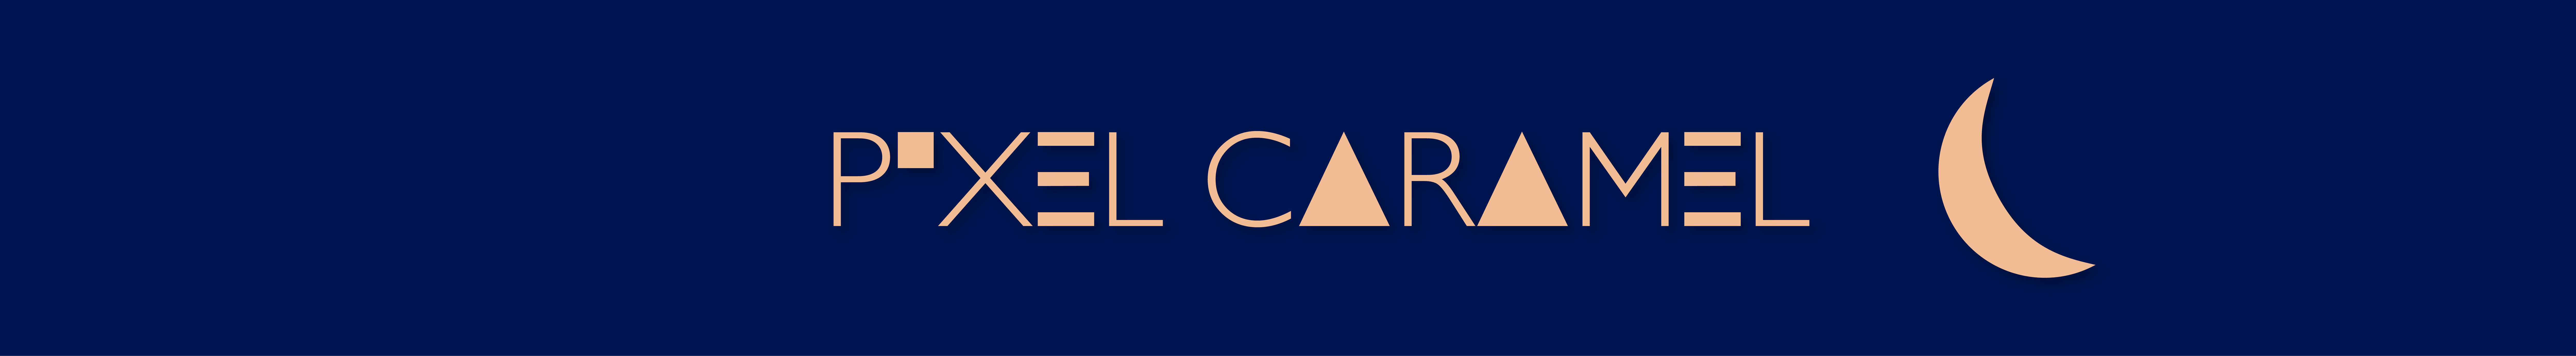 Pixel Caramel's profile banner